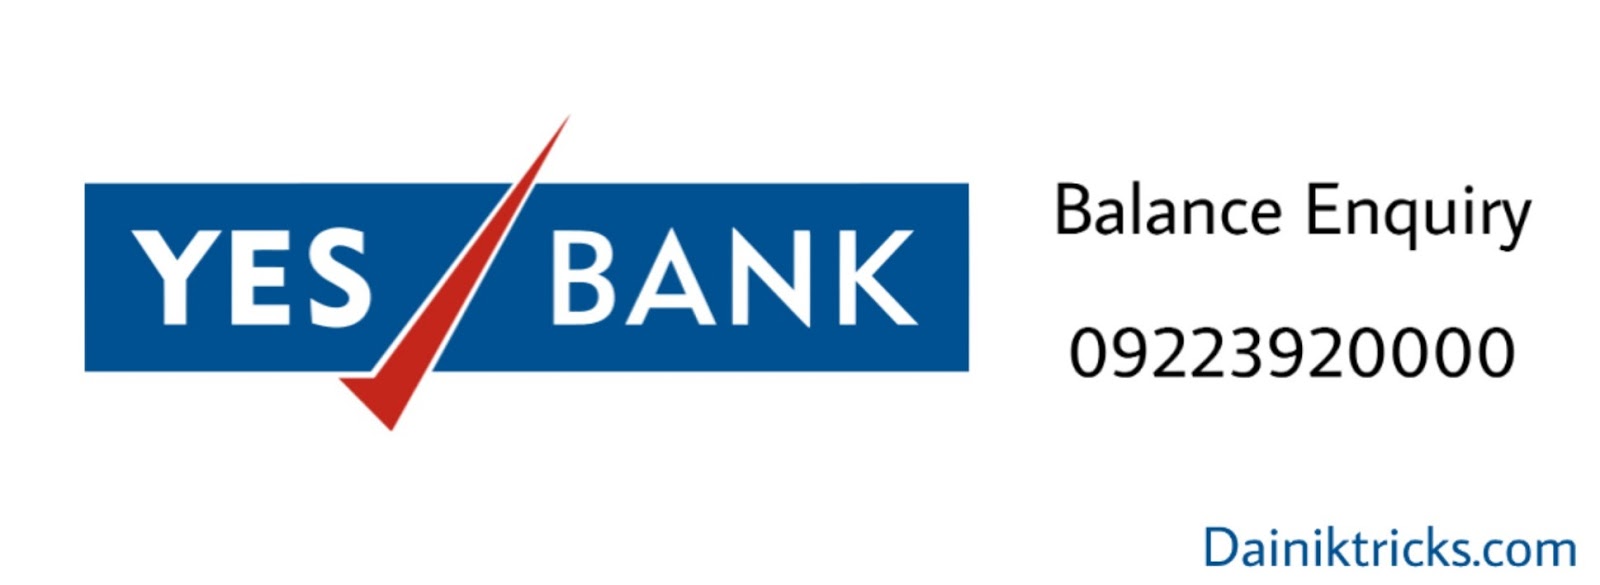 T me aged bank. Yes Bank. Логотип несуществующего банка.